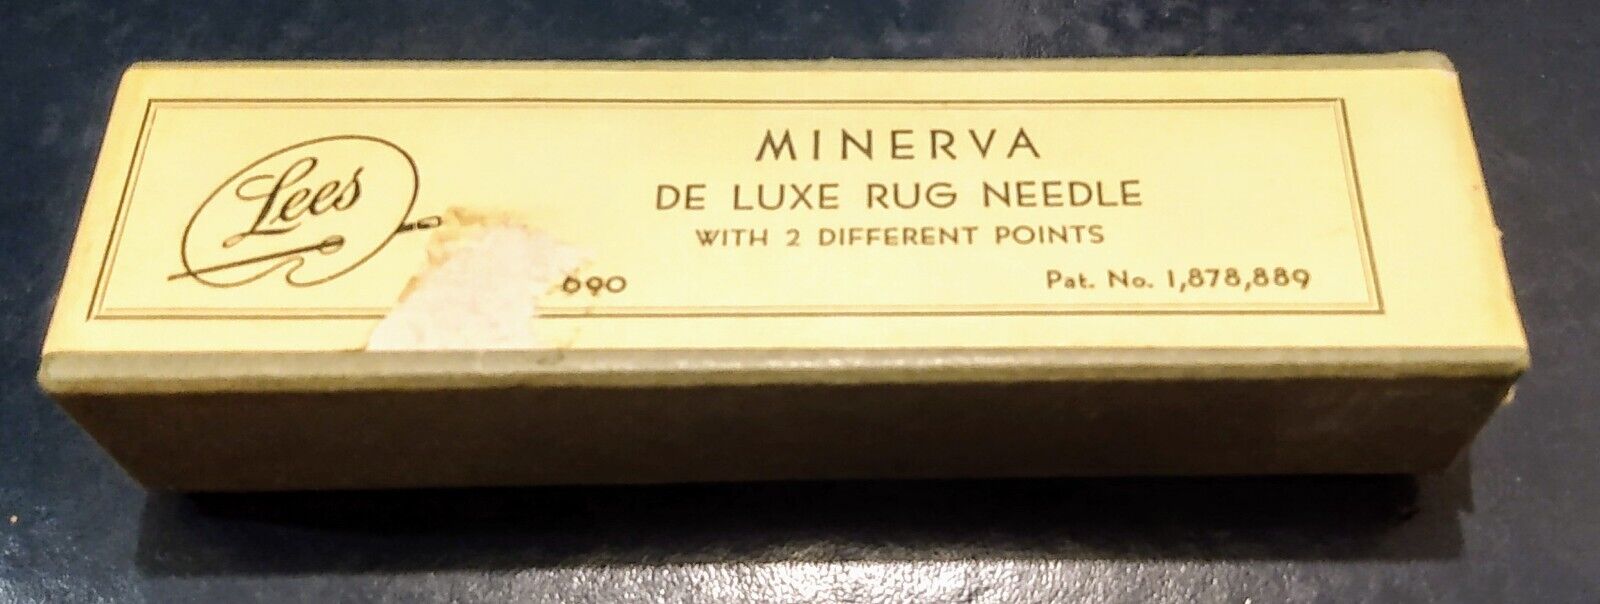 Vintage Minerva De Luxe Rug Needle By Lees